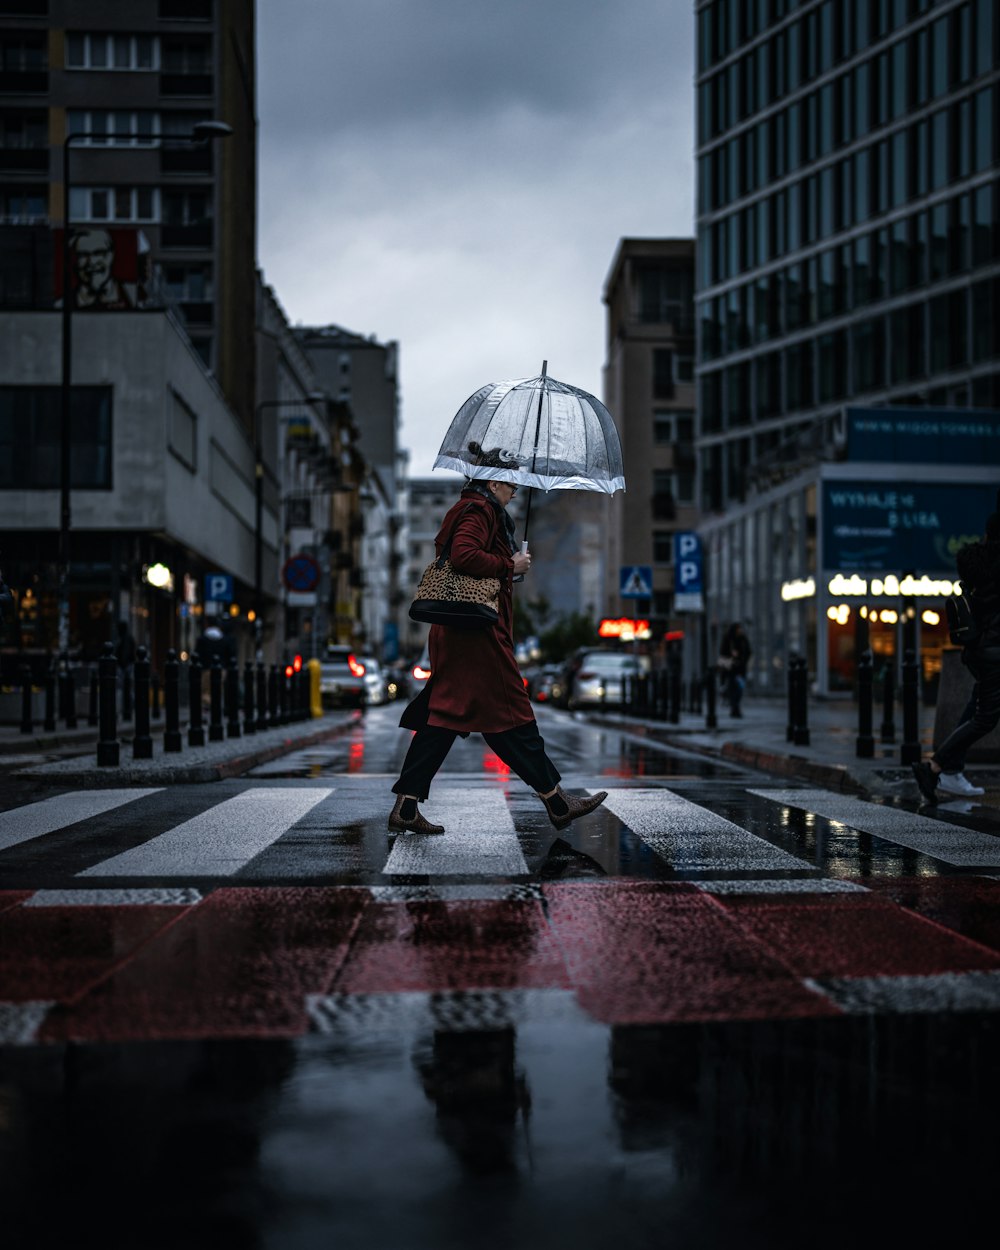 a person walking across a street holding an umbrella